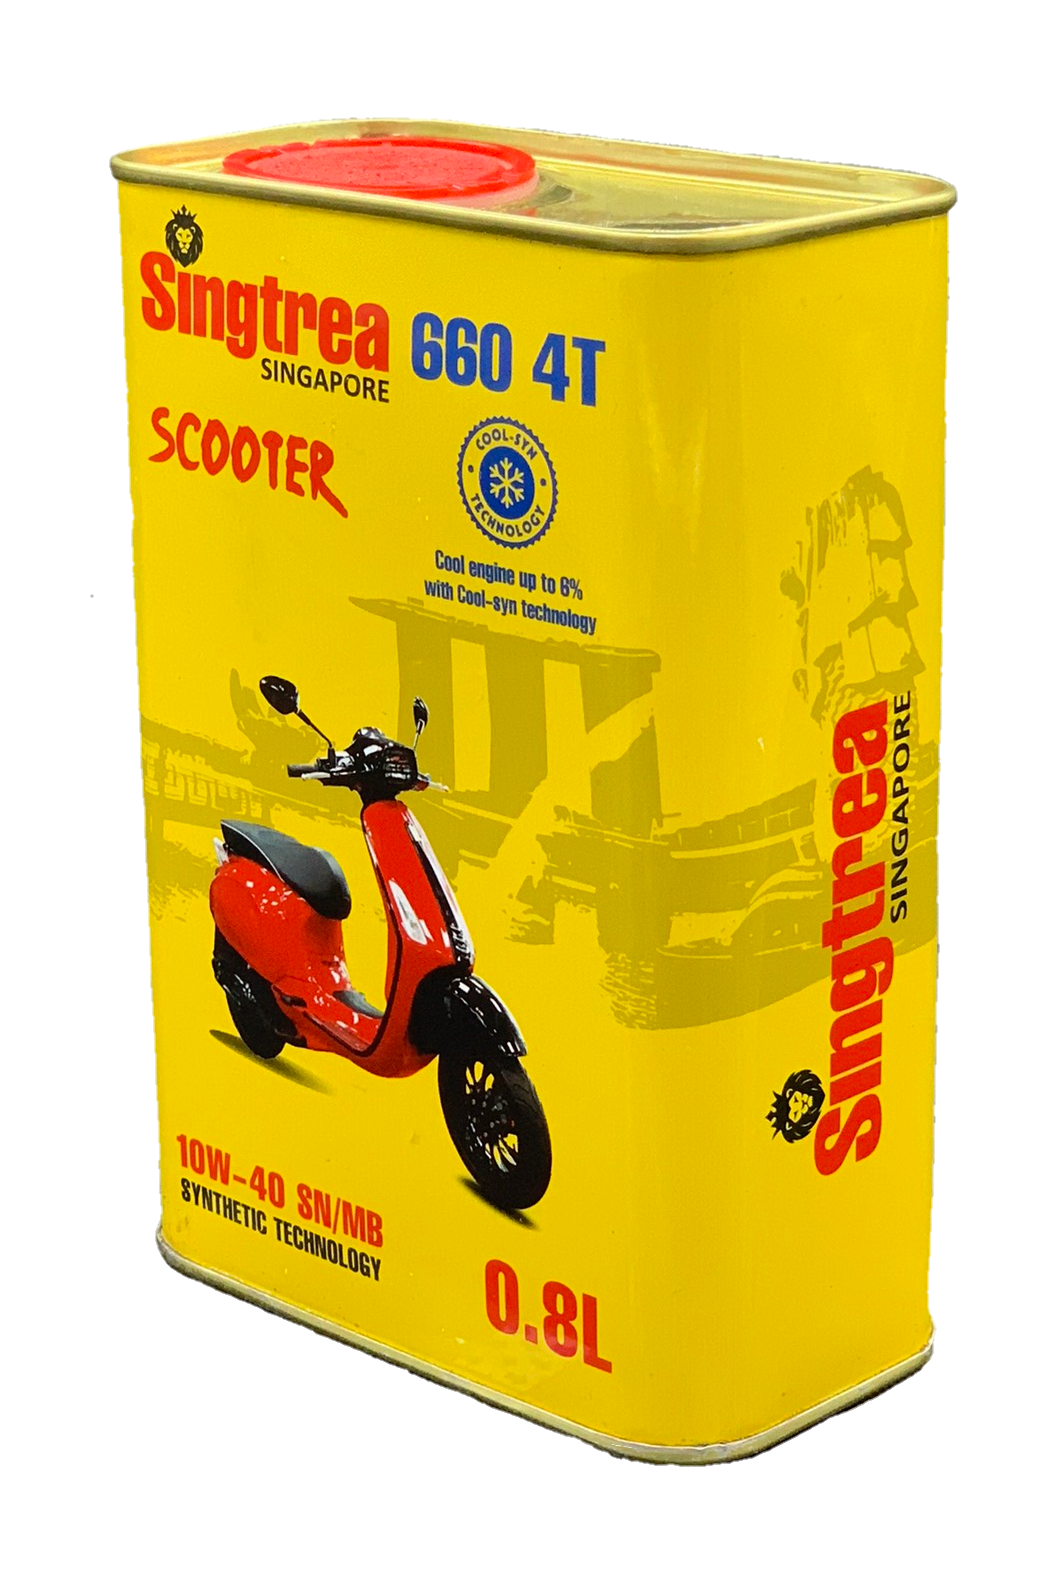 Singtrea 660 Scooter